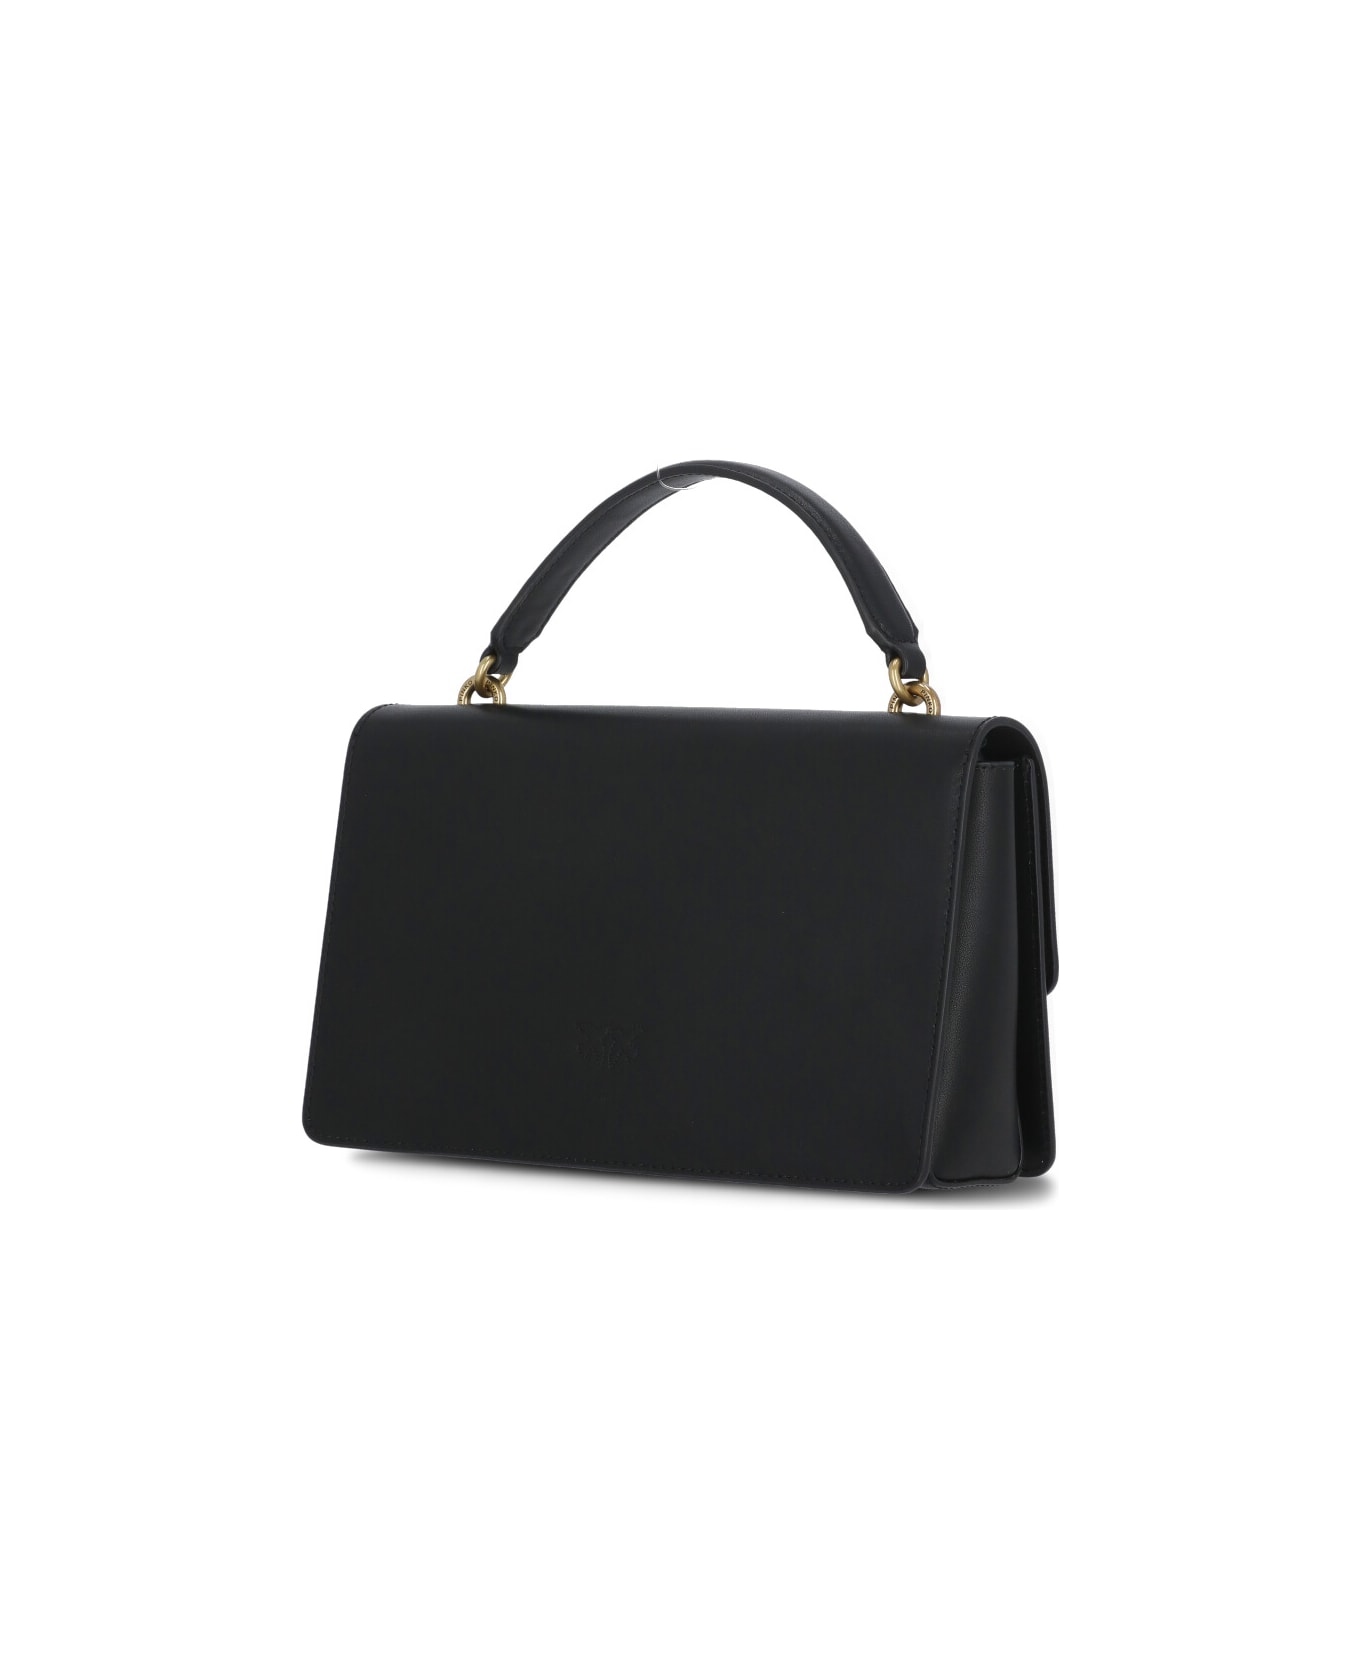 Pinko Classic Love Bag Light Handbag - Black